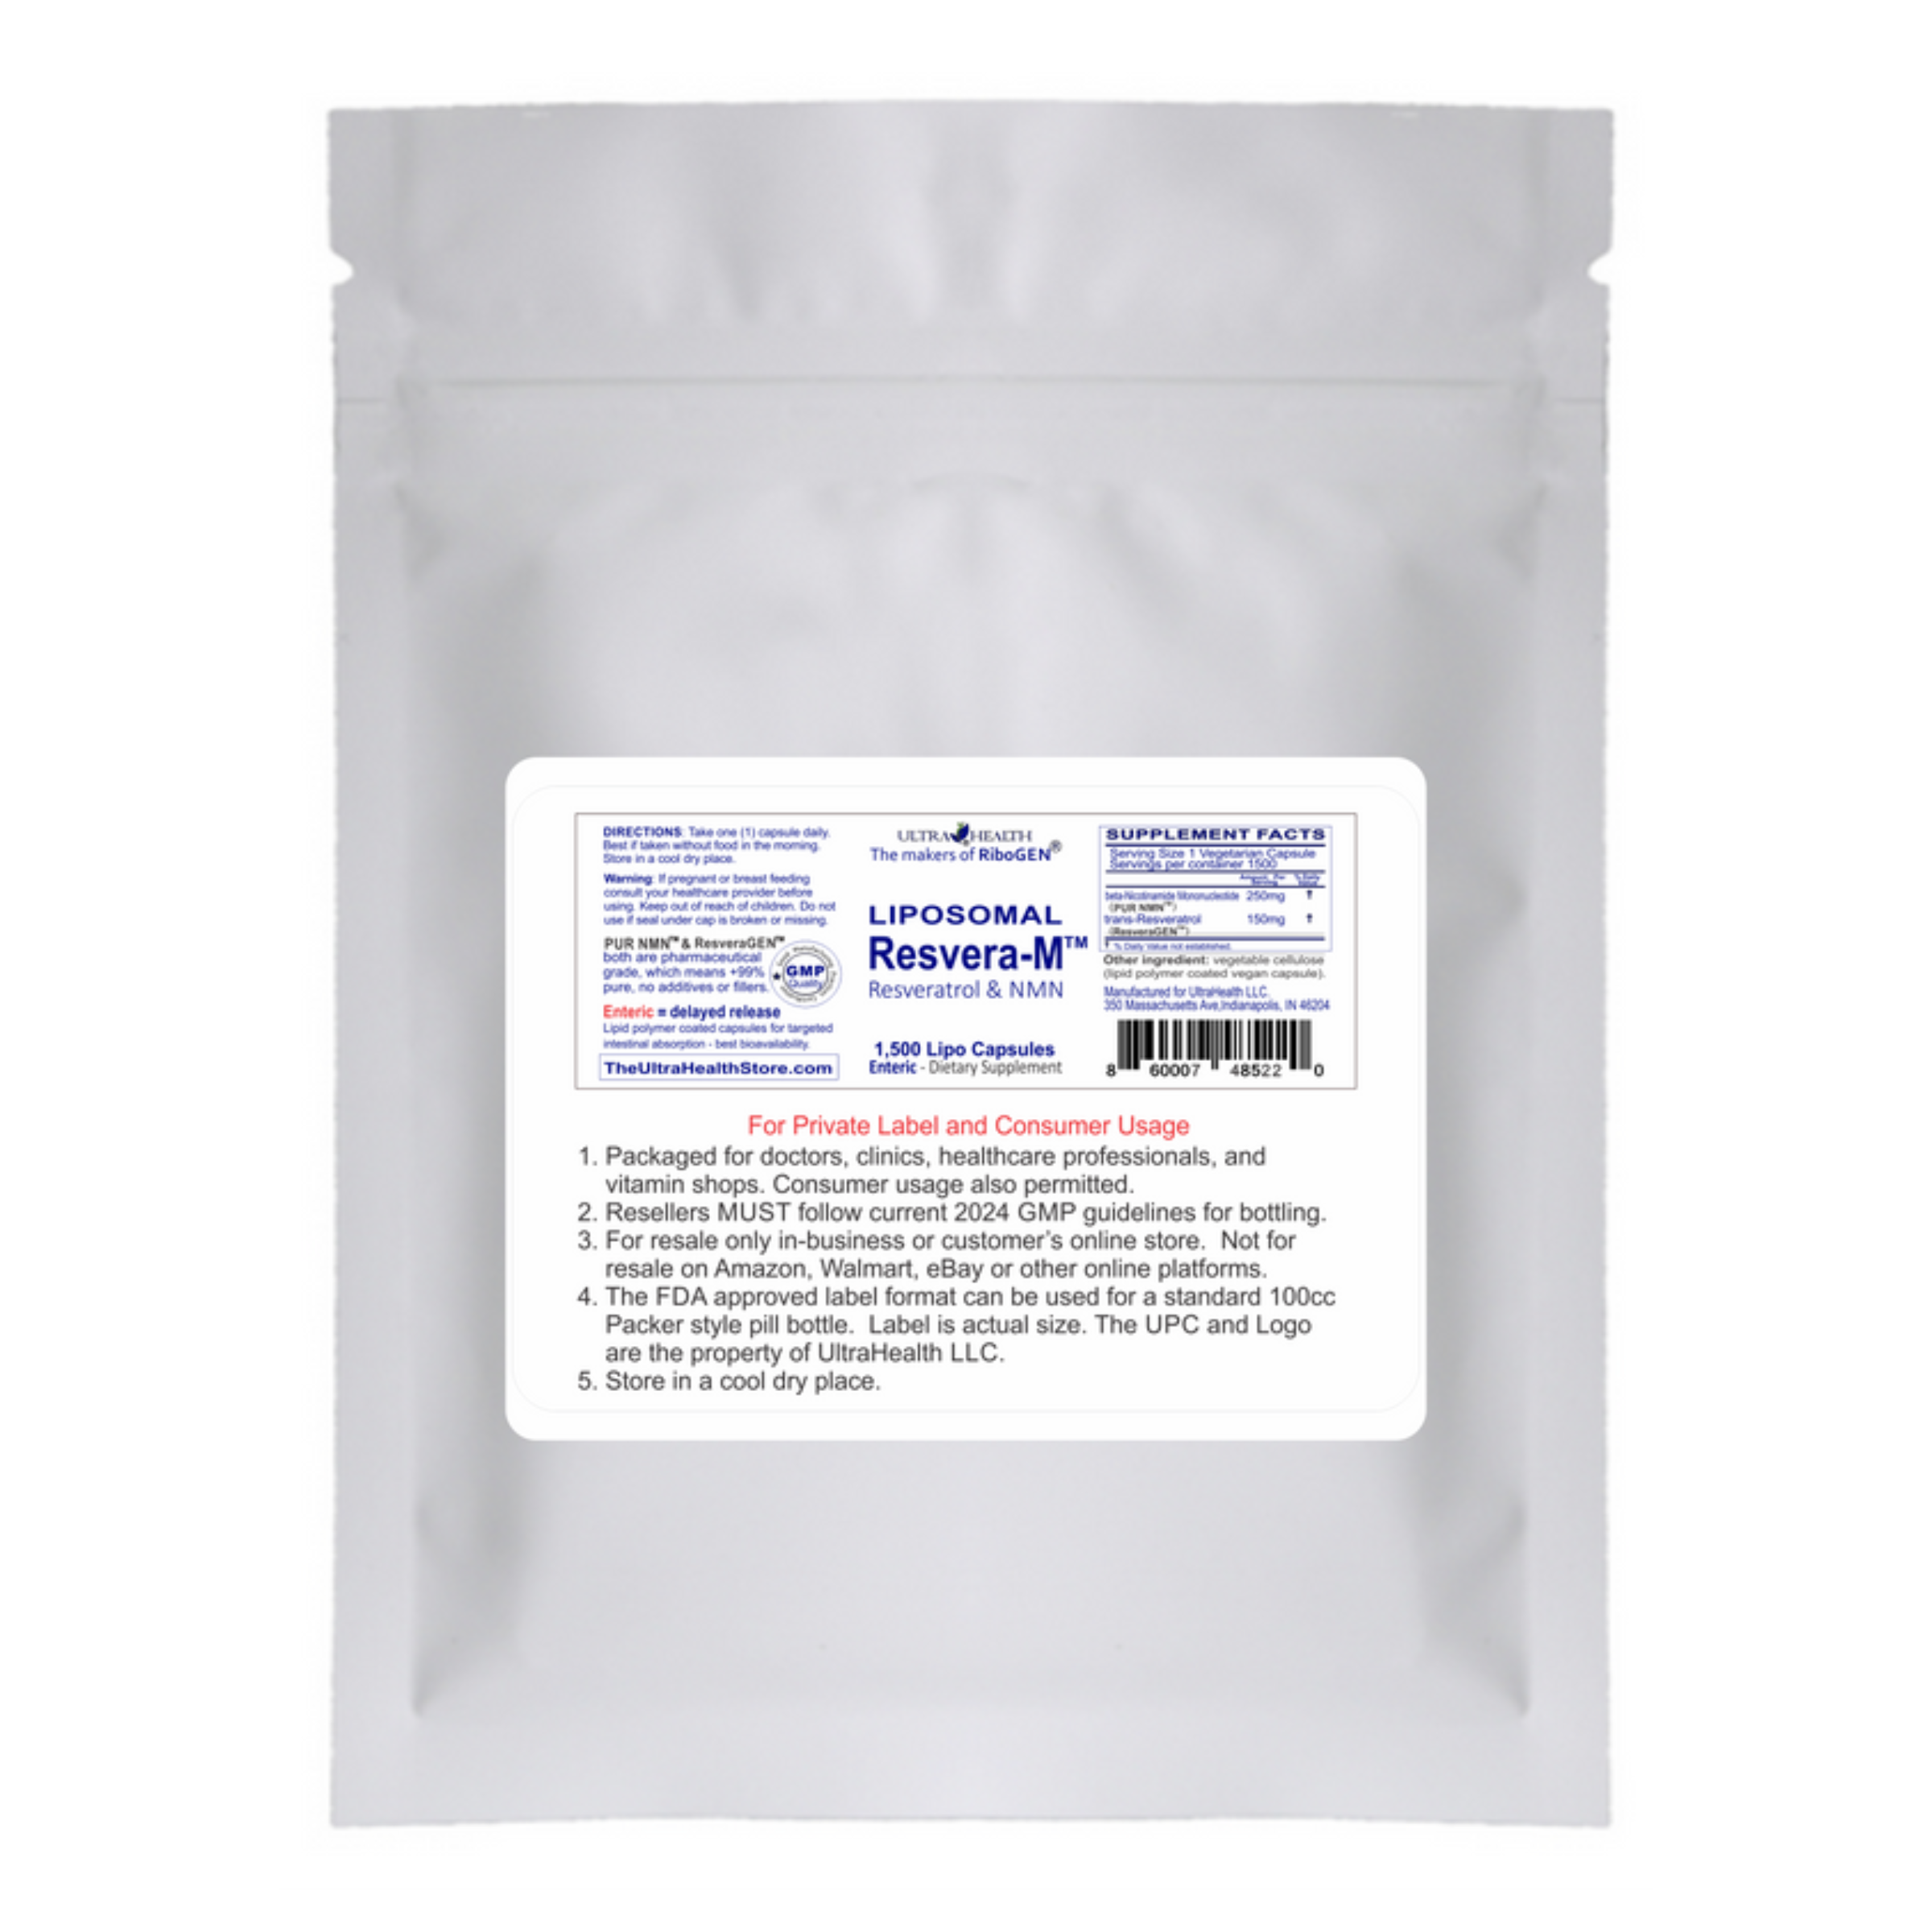 1500E-RM INTL, bulk saver supply, Resveratrol and PUR N.M.N., NAD+ Boosting Supplement, 400mg, Liposomal Enteric Capsules